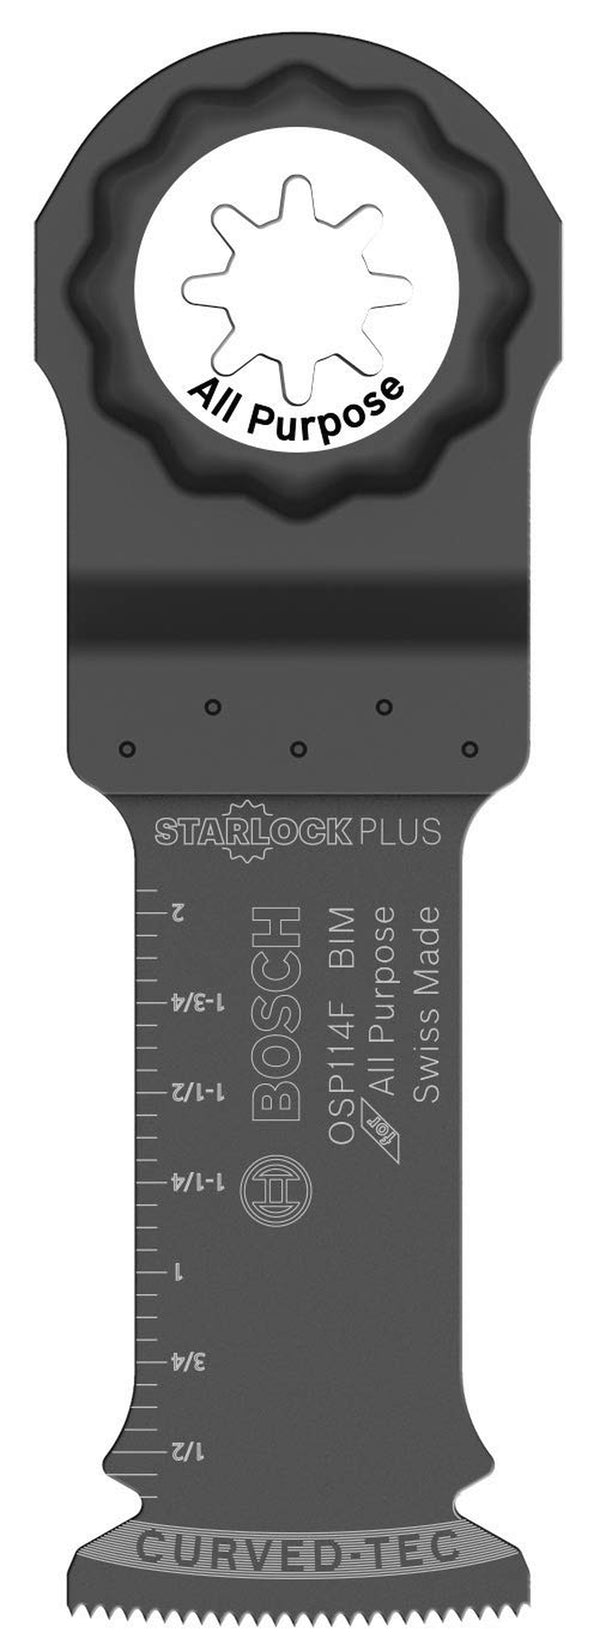 BOSCH OSP114F 1-1/4 In. Starlockplus Oscillating Multi Tool Bi-Metal Plunge Cut Blade